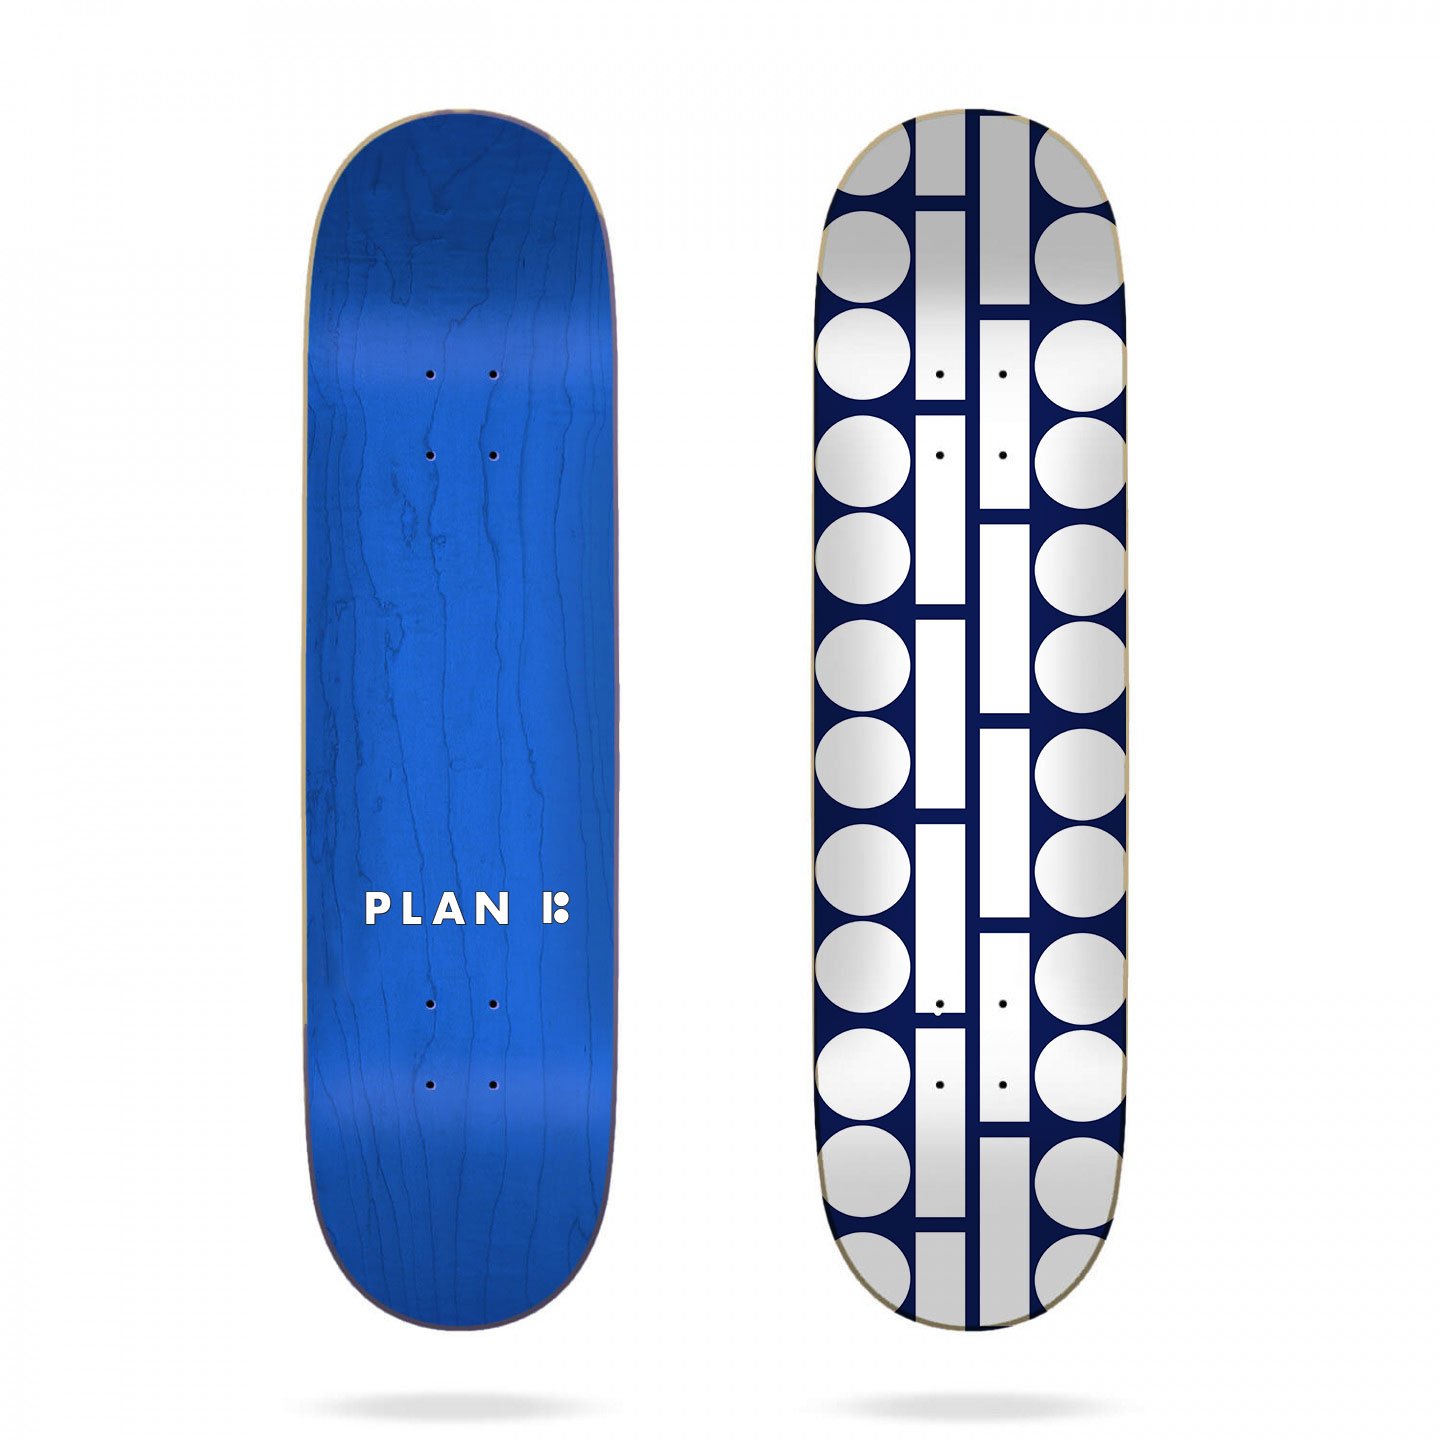 PlanB-Pattern1.jpg